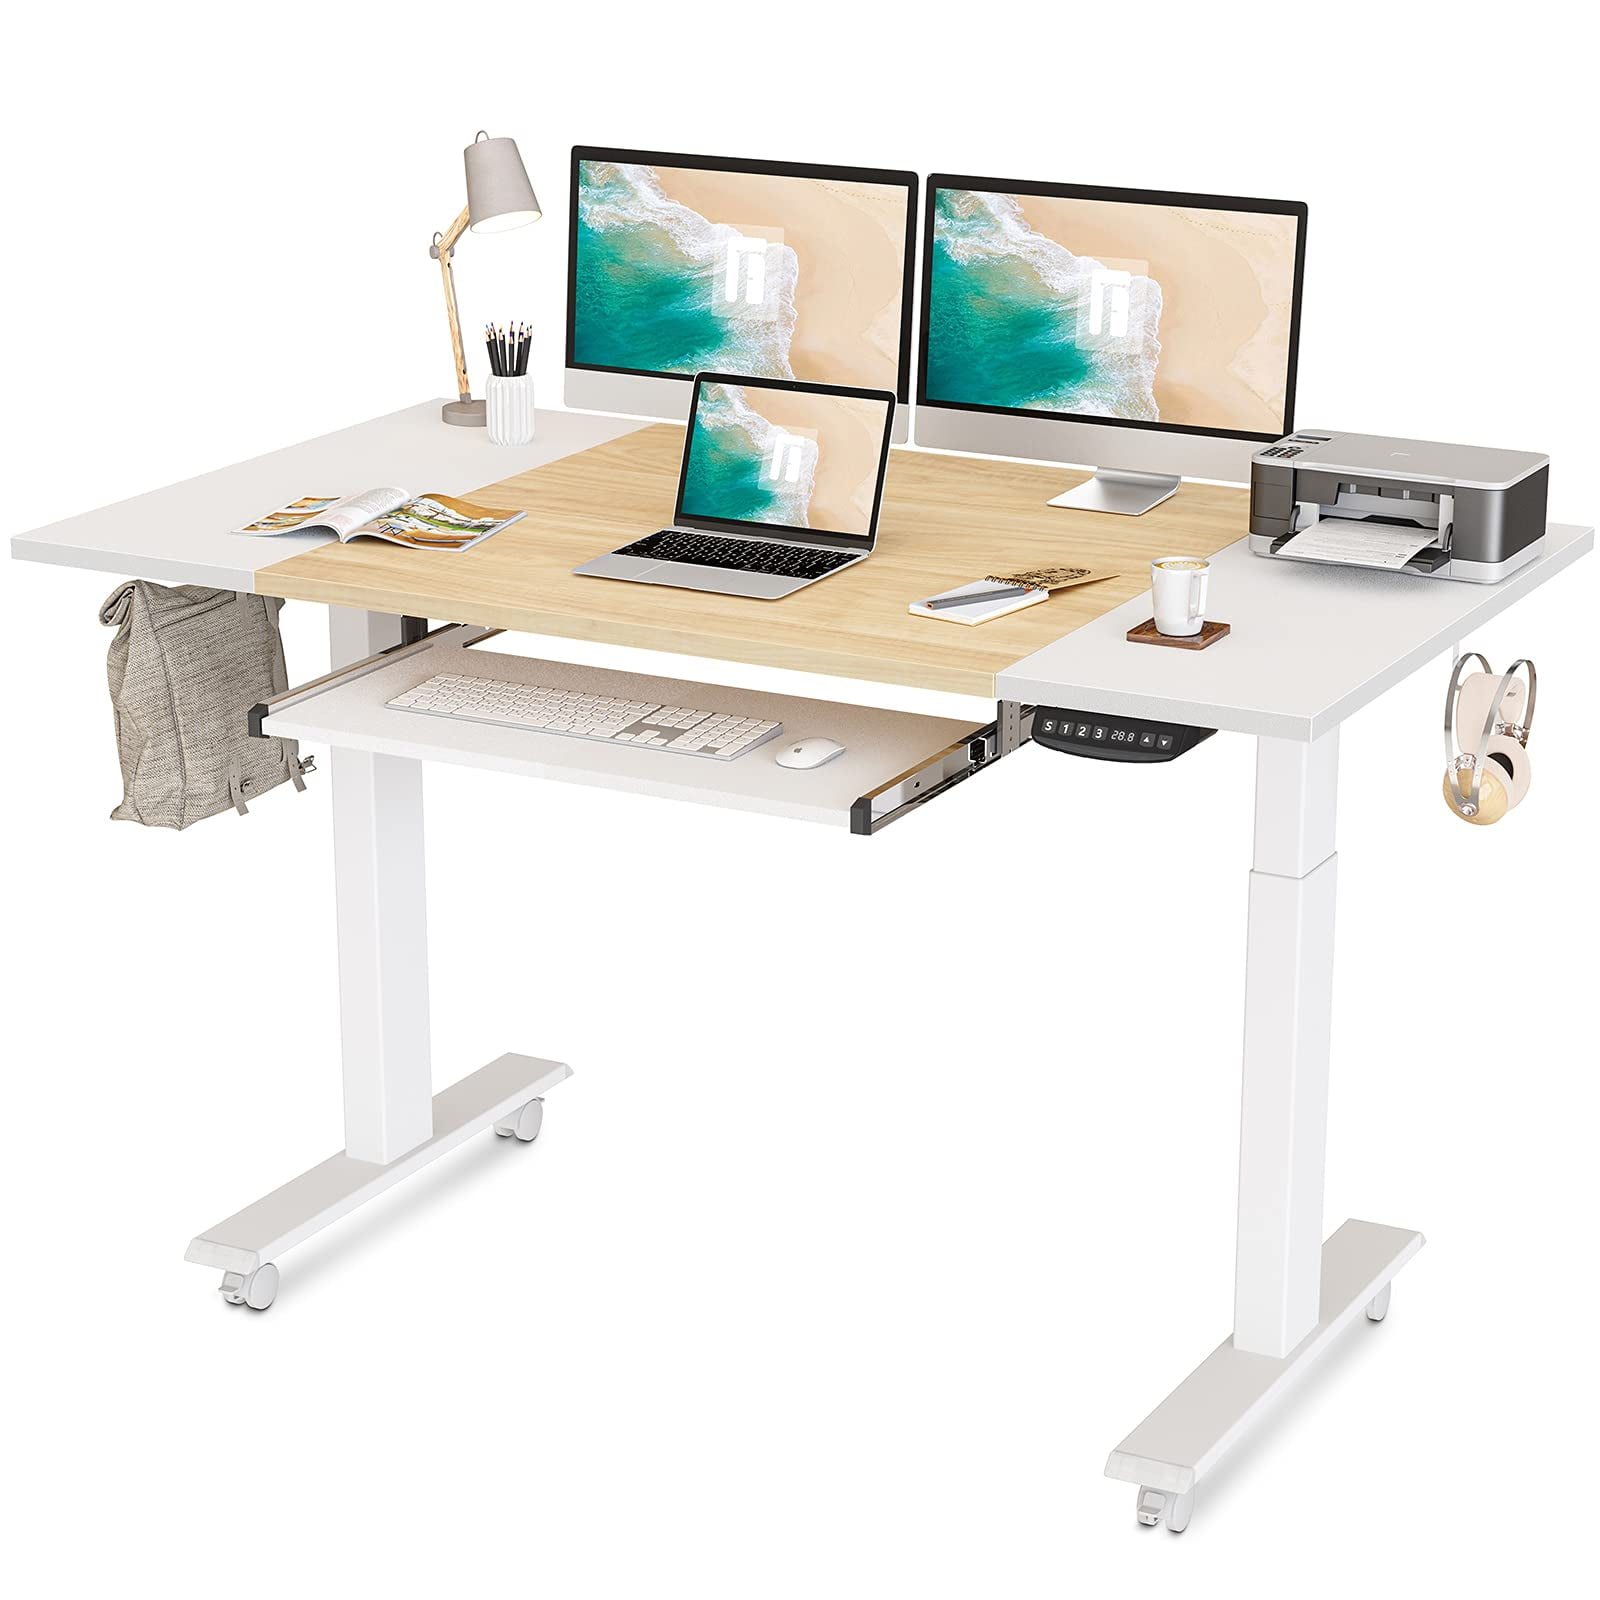 Fezibo Standing Desk Mats - Vernal